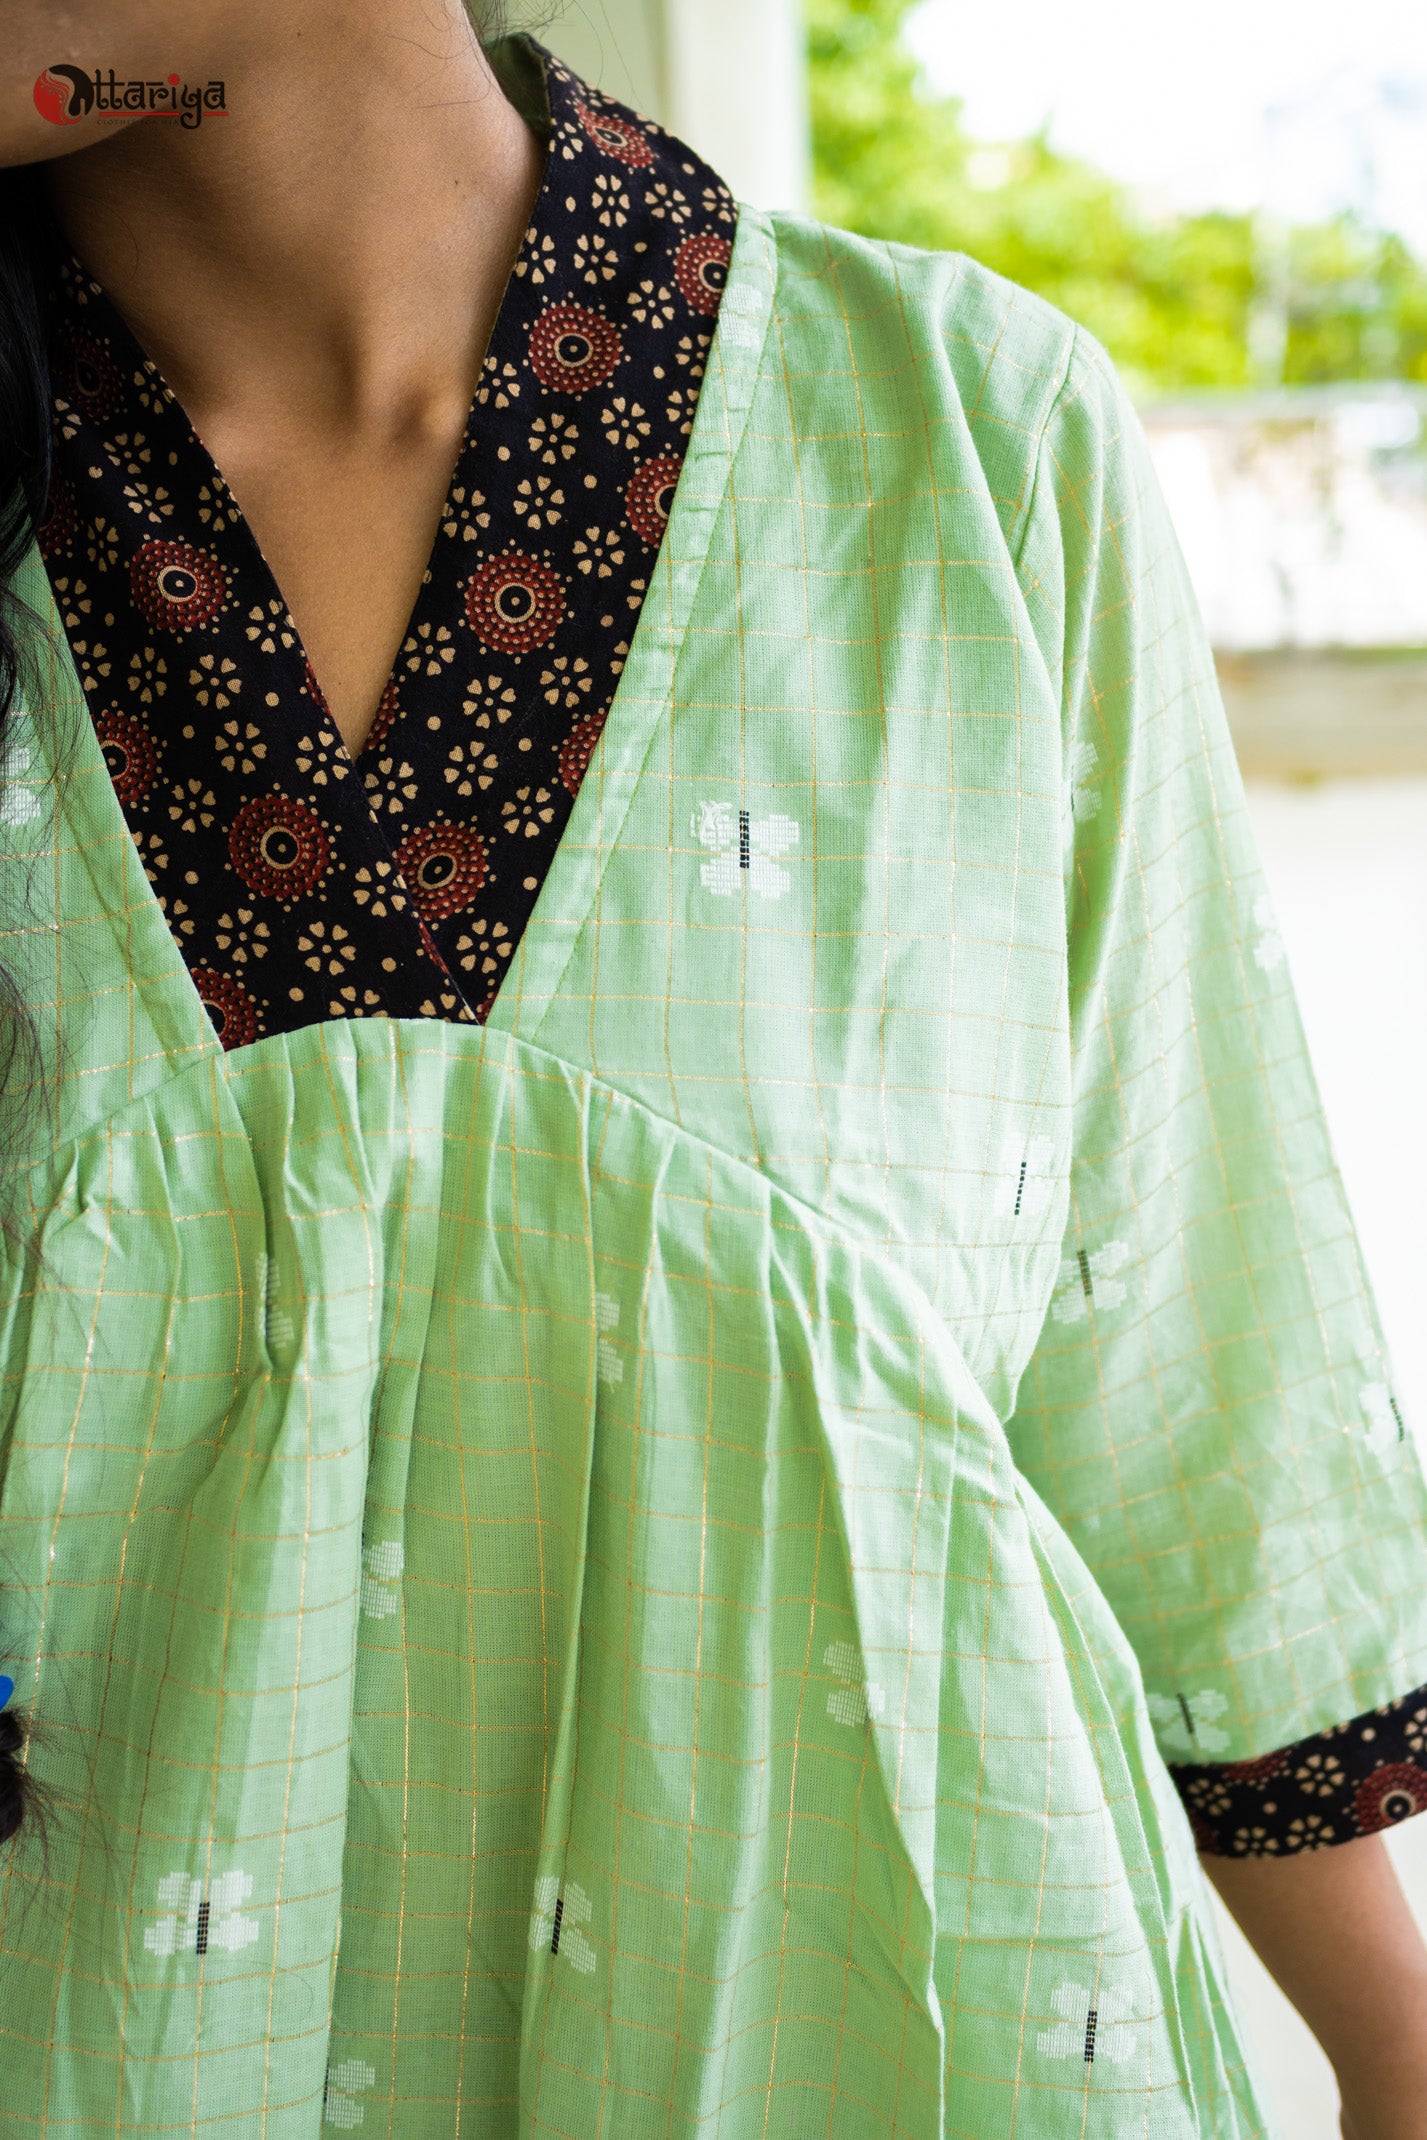 Ecospun Elegance: The Sustainable Splendor Dress